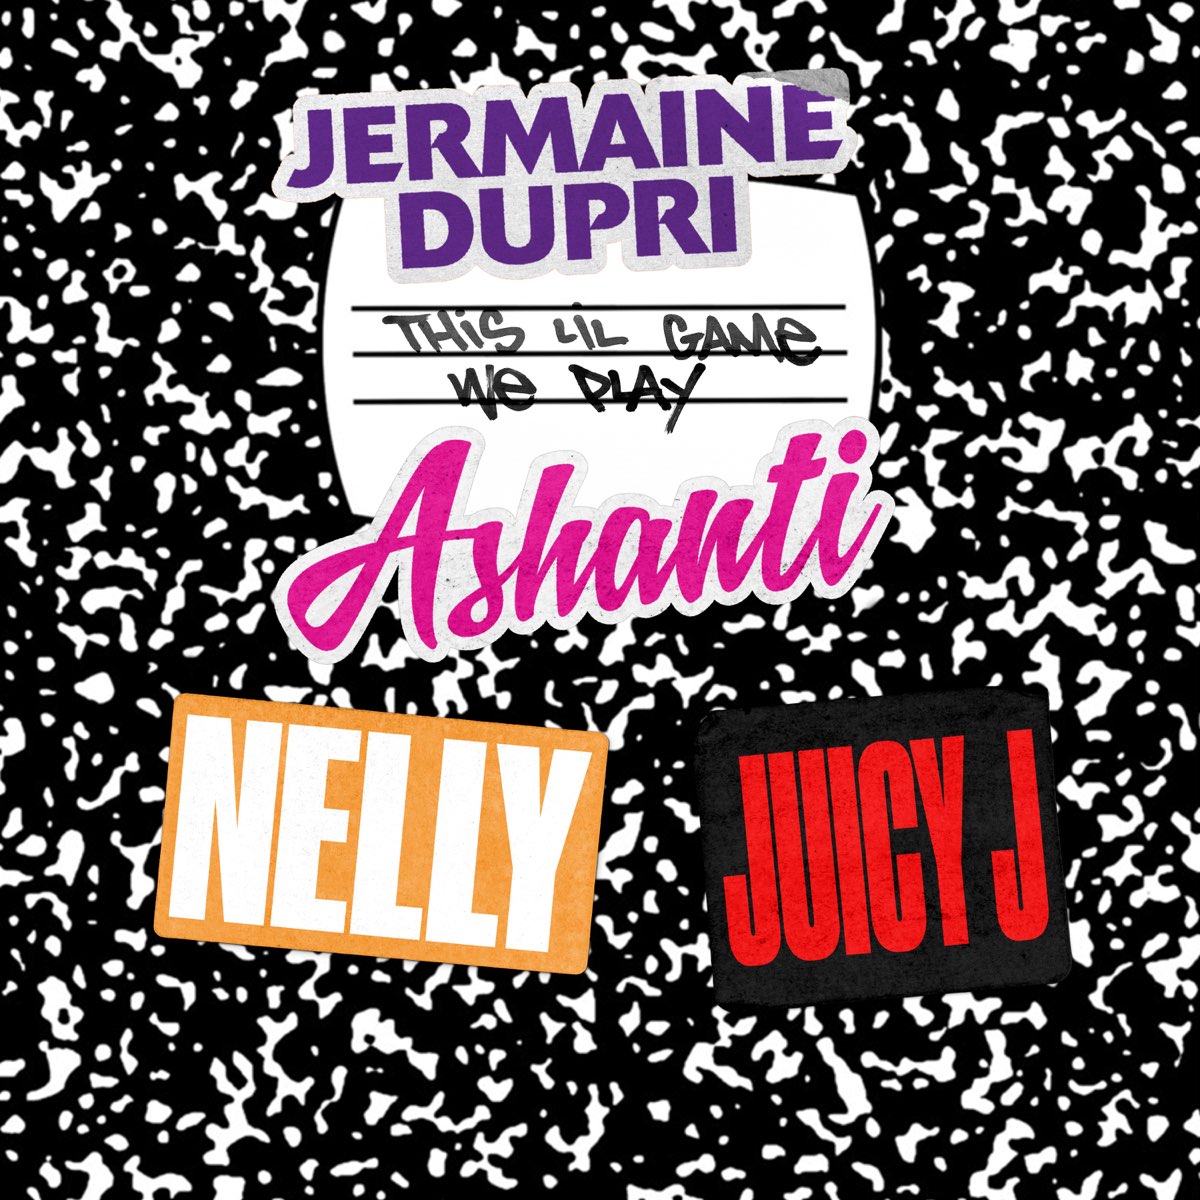 Jermaine Dupri - This Lil' Game We Play Ft. Nelly, Ashanti & Juicy J